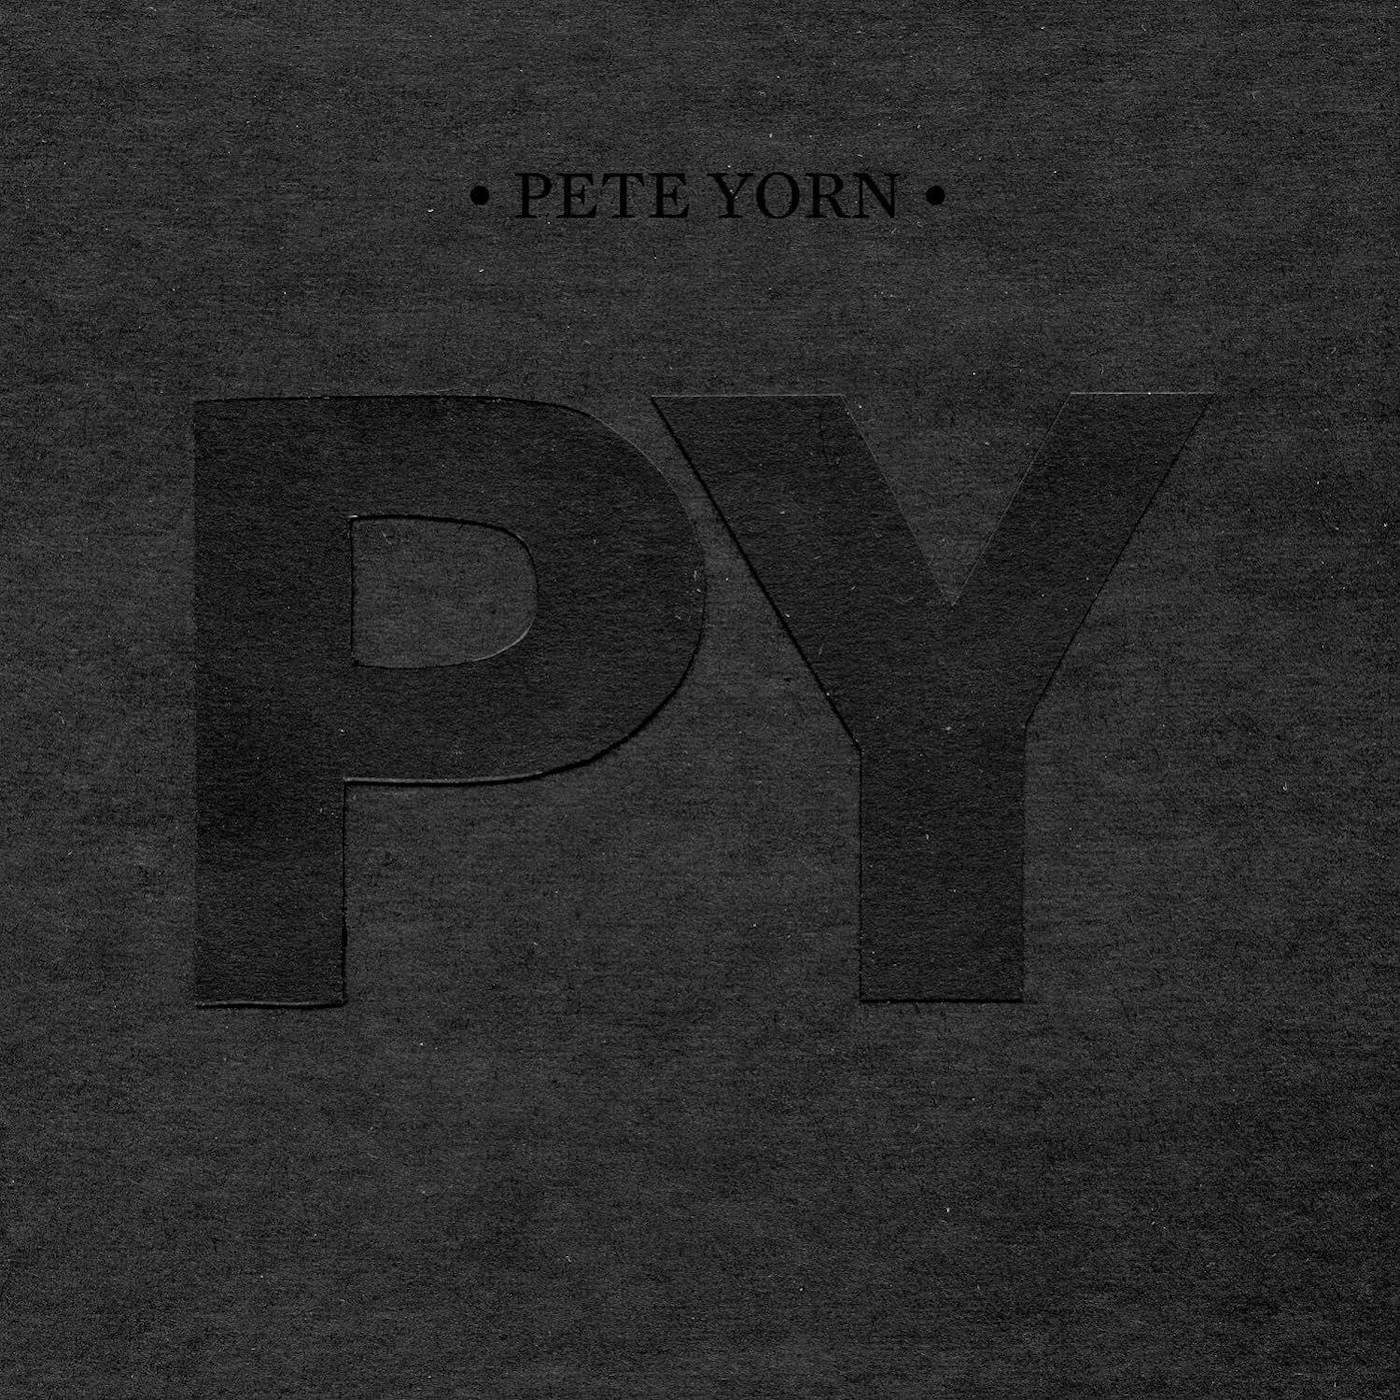  Pete Yorn Vinyl Record